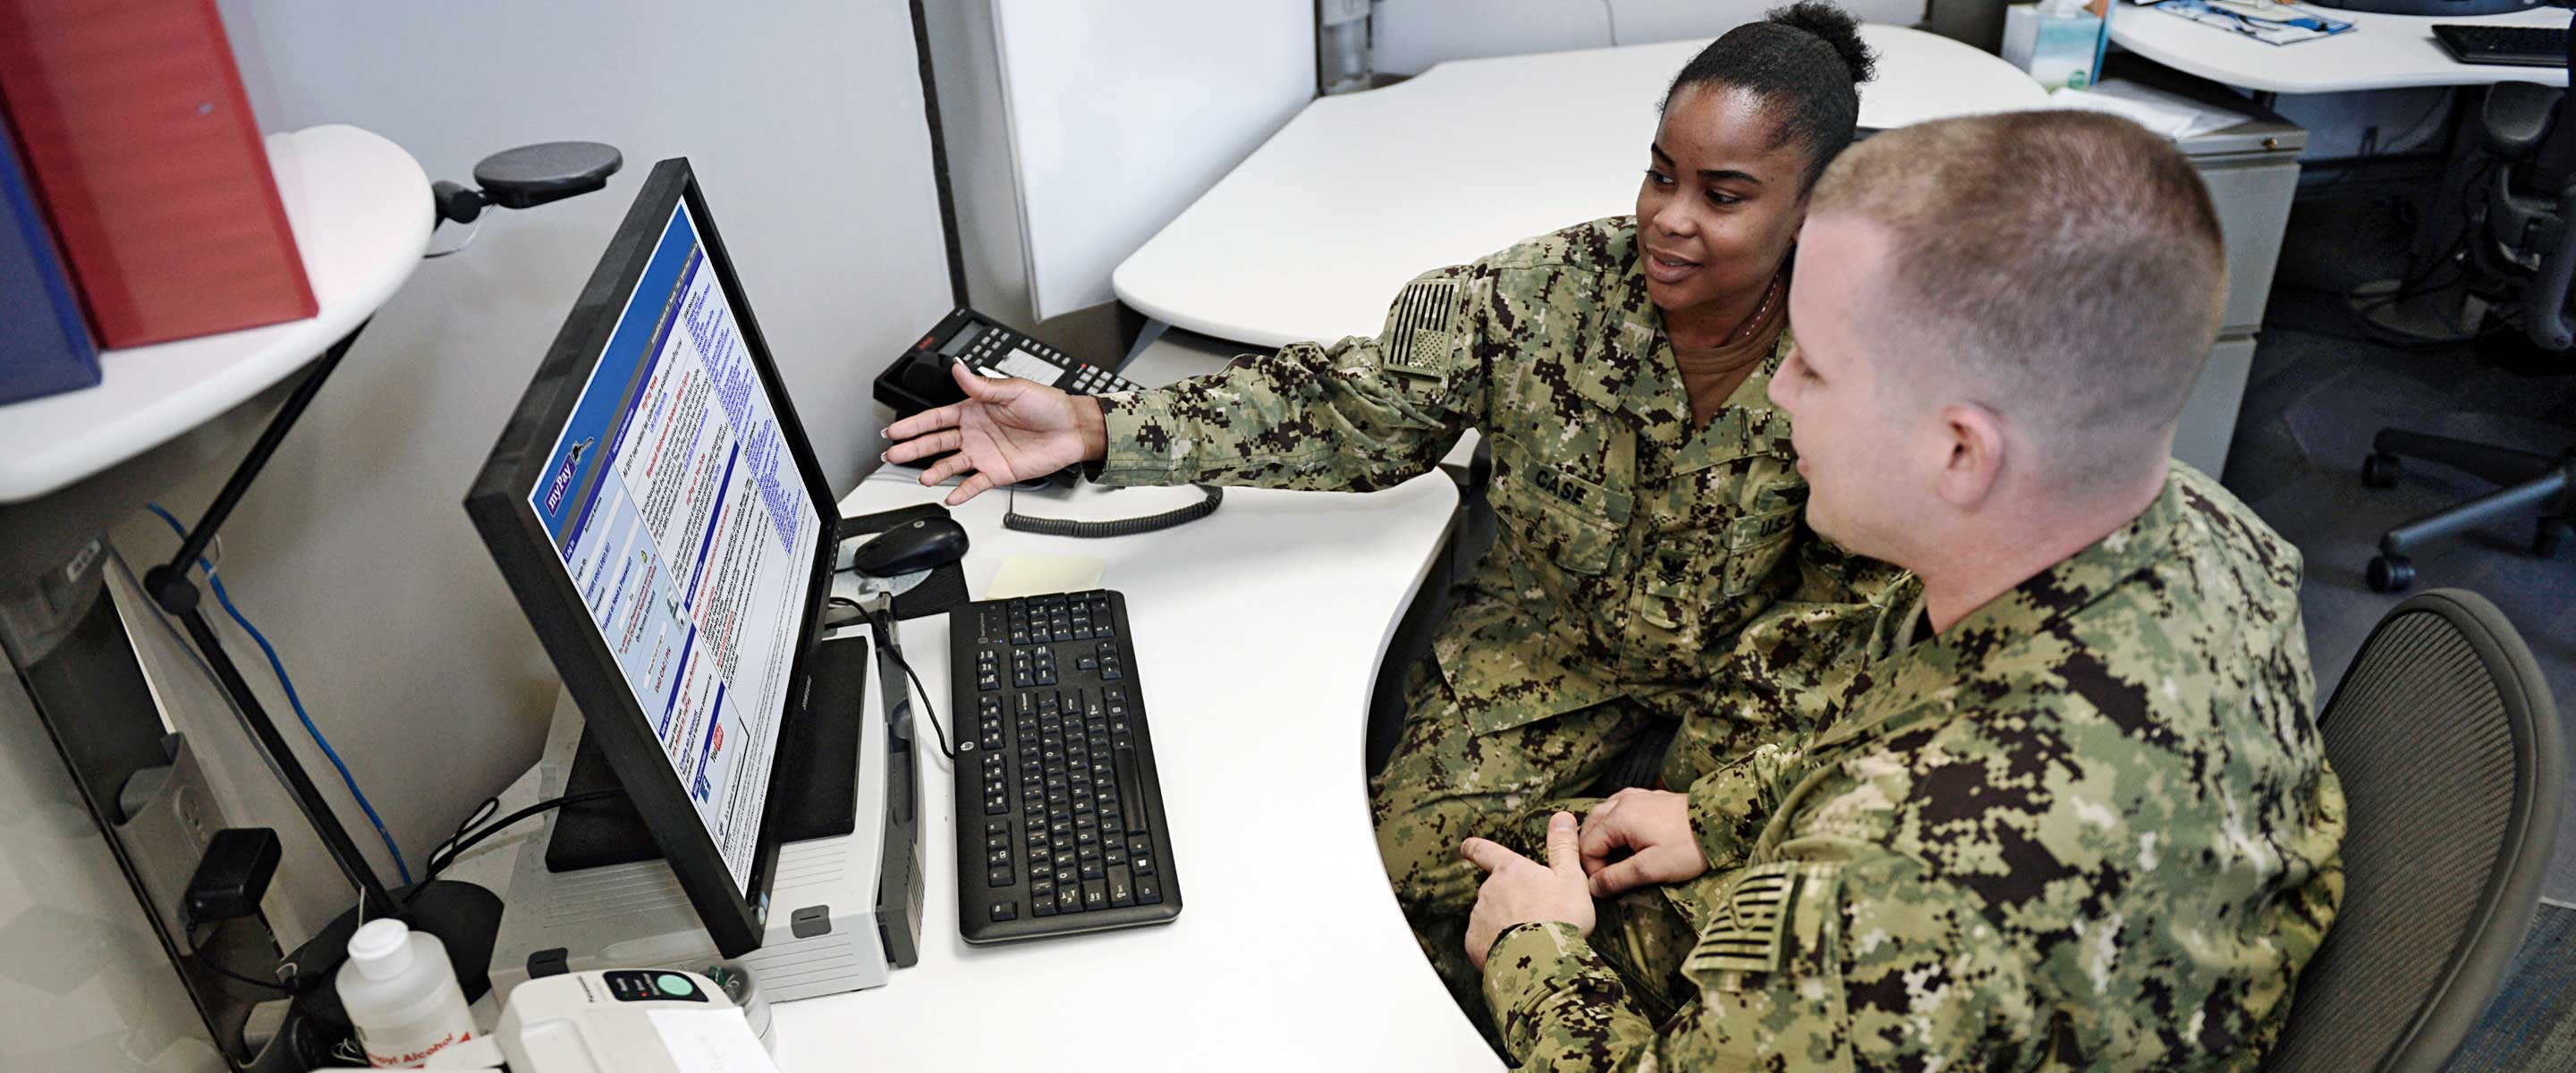 U.S. Navy Pay Grade Charts & Military Salaries - Navy.com